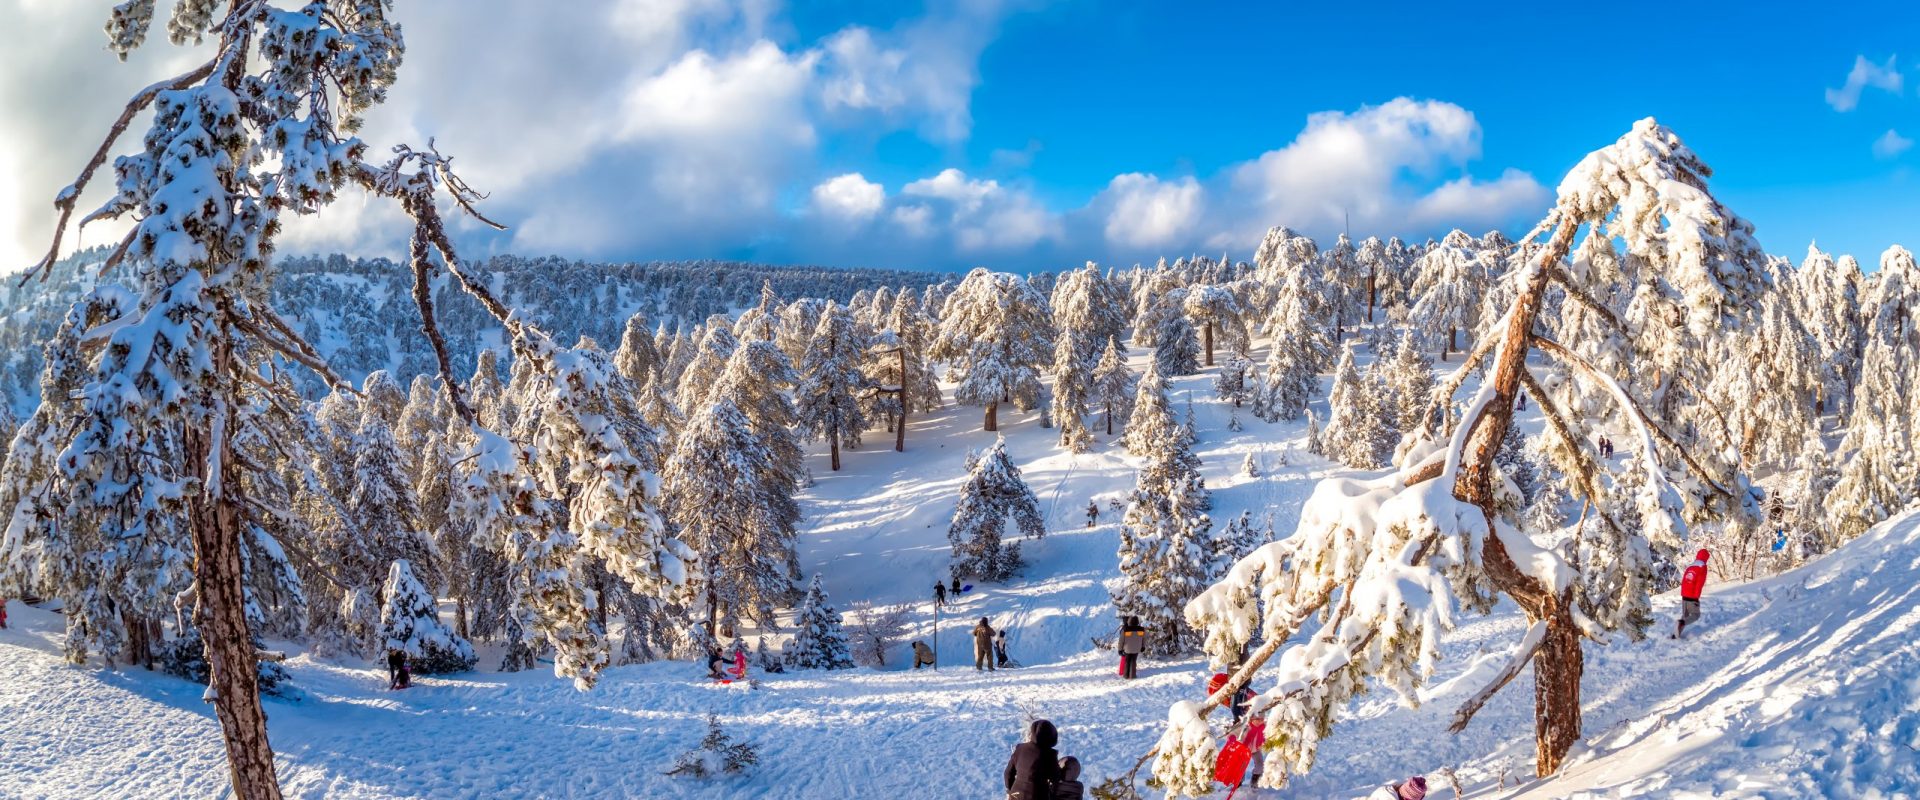 Cyprus Ski